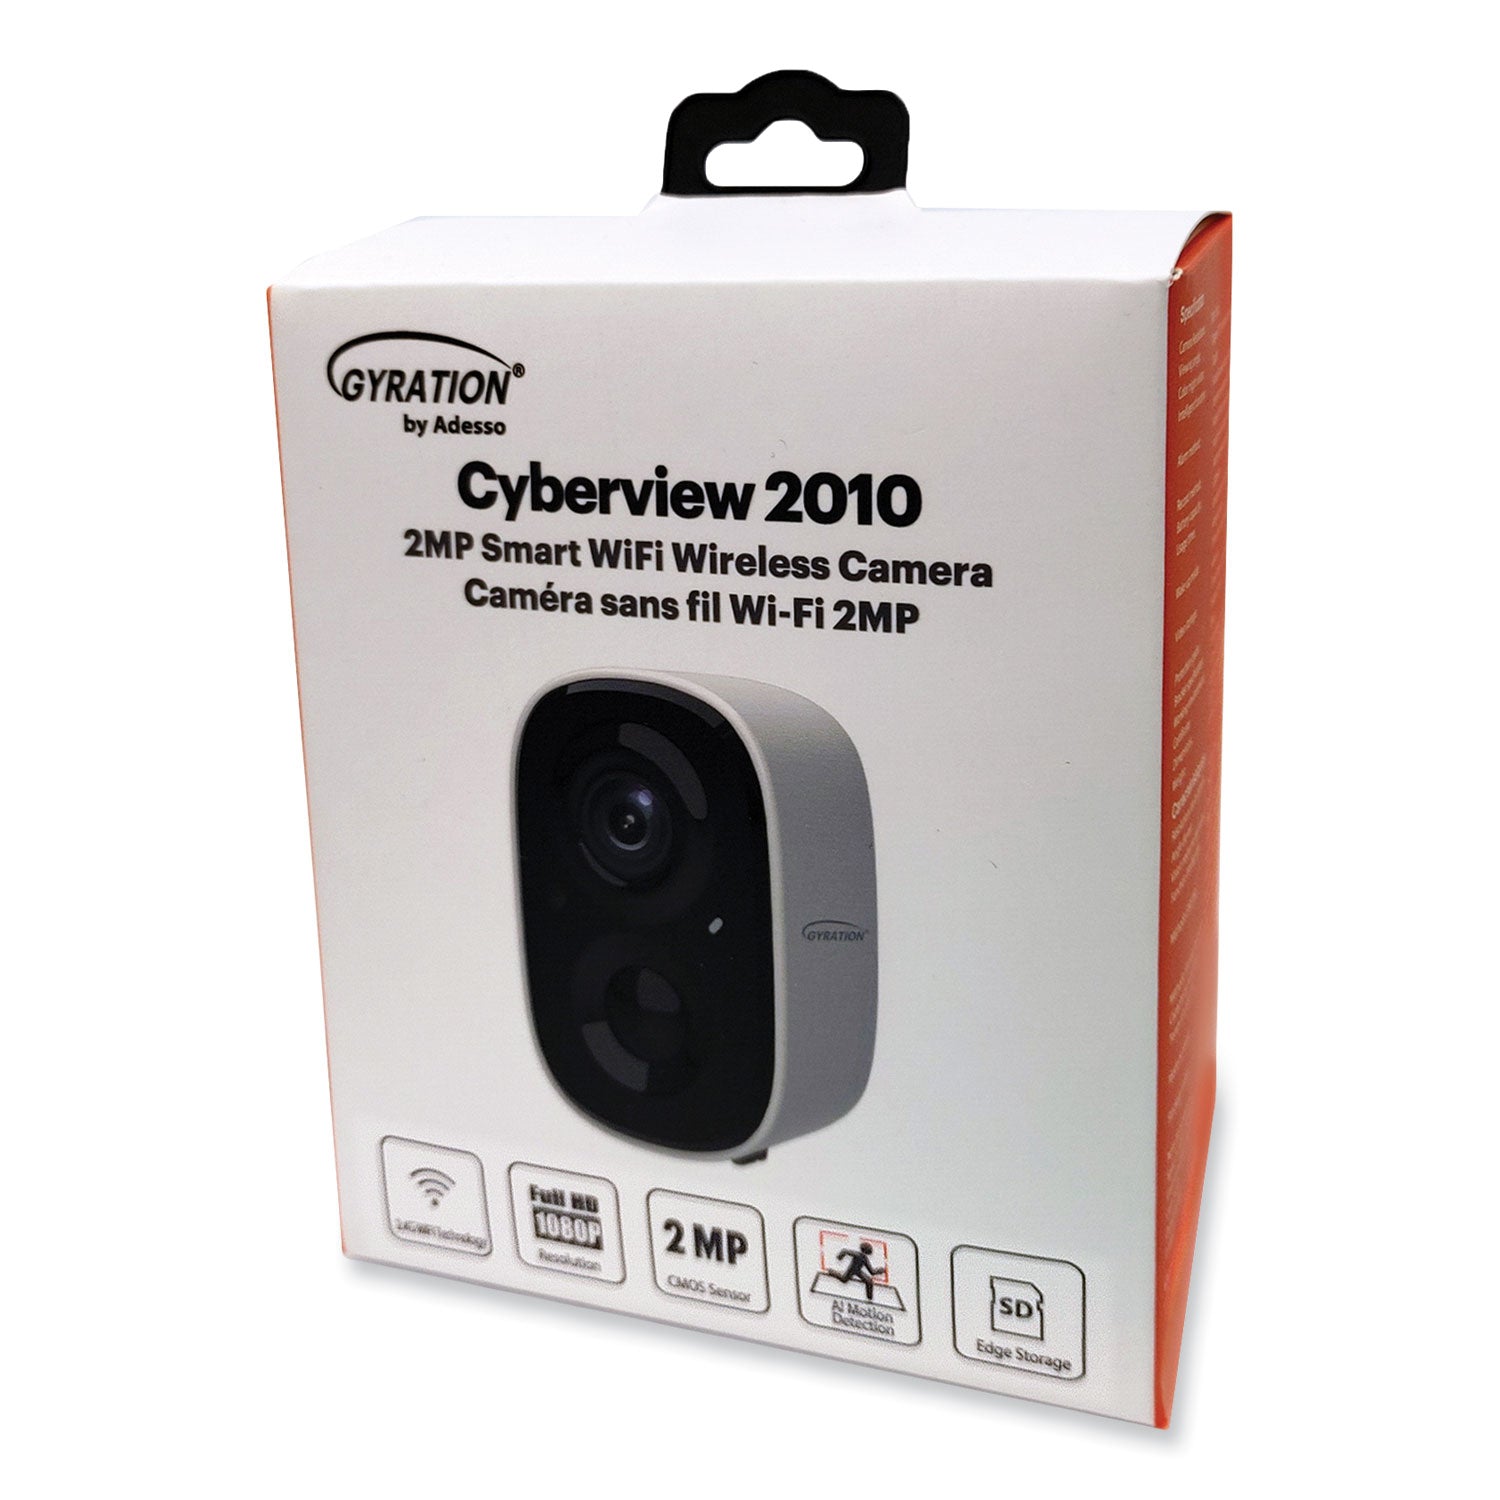 cyberview-2010-2mp-smart-wifi-wireless-camera-1920-x-1080-pixels_adecybrview2010 - 2